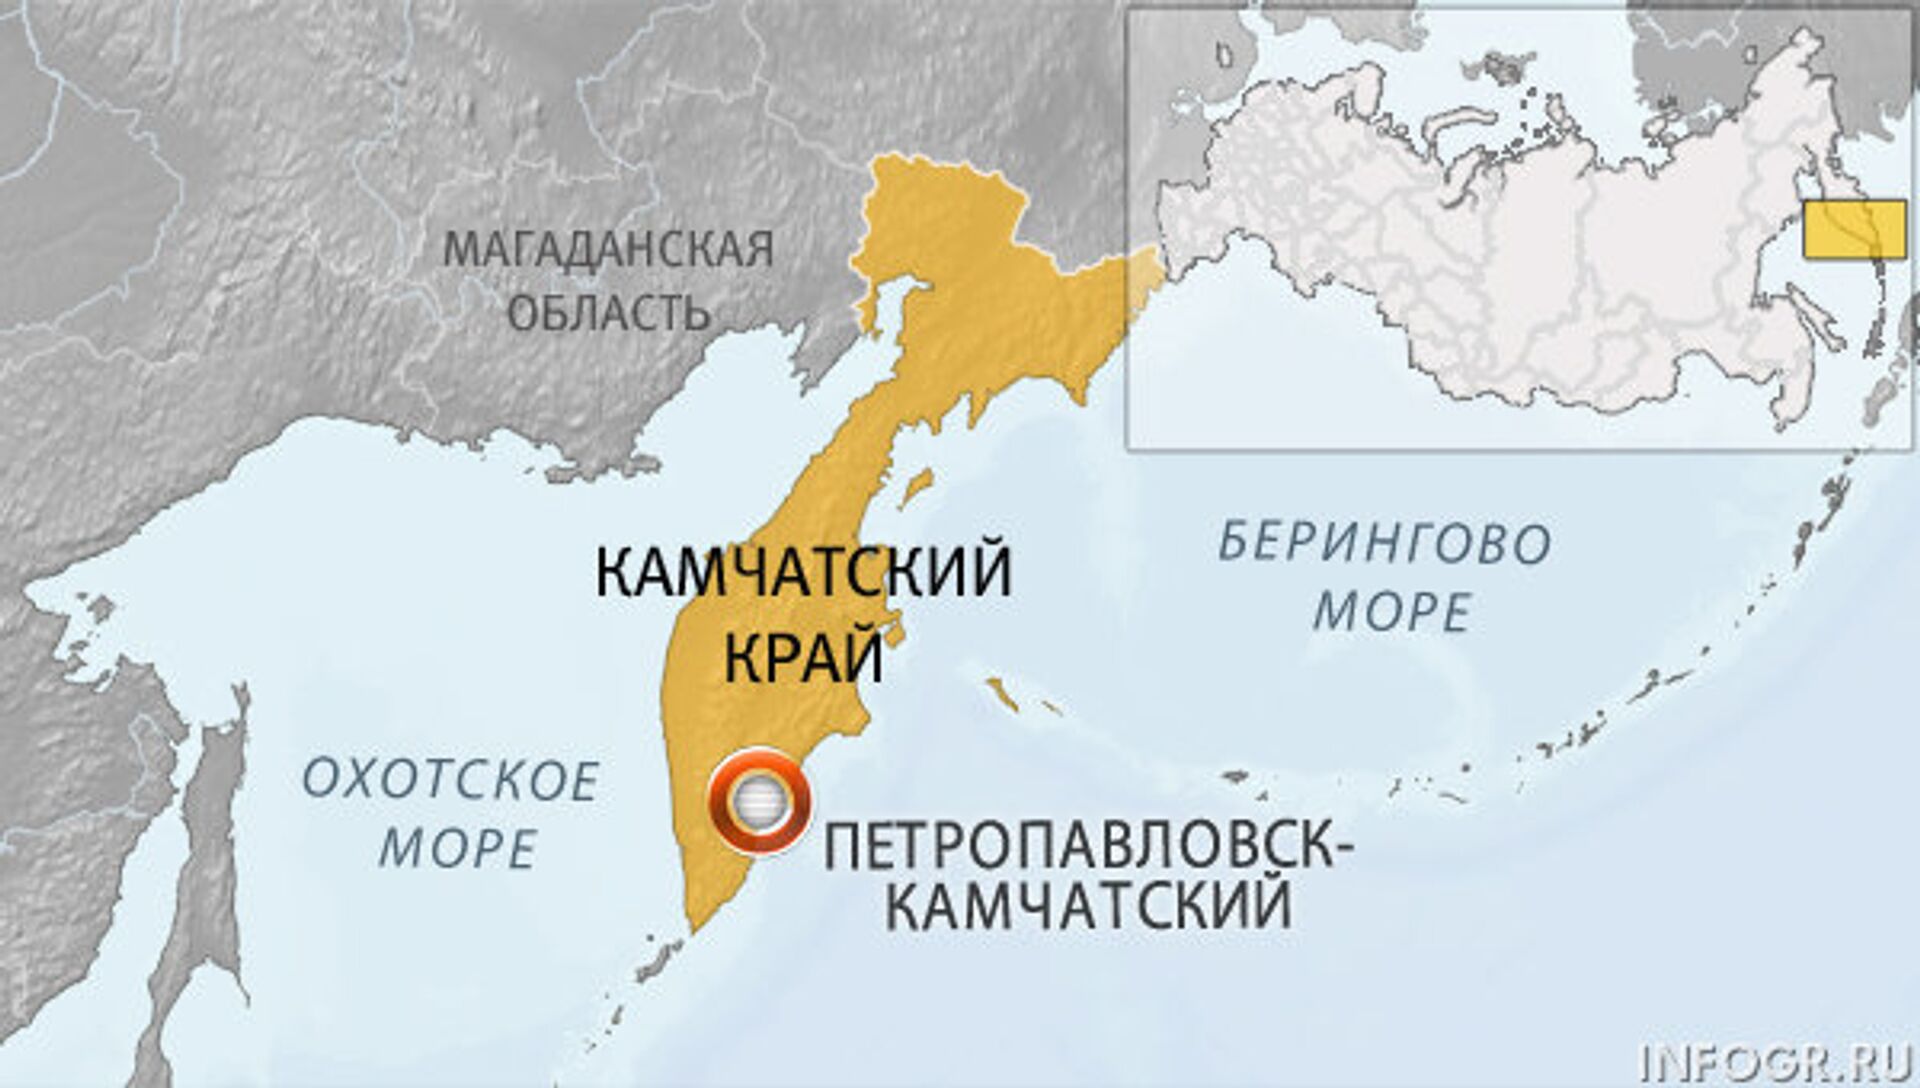 Петропавловск-Камчатский на карте Камчатки